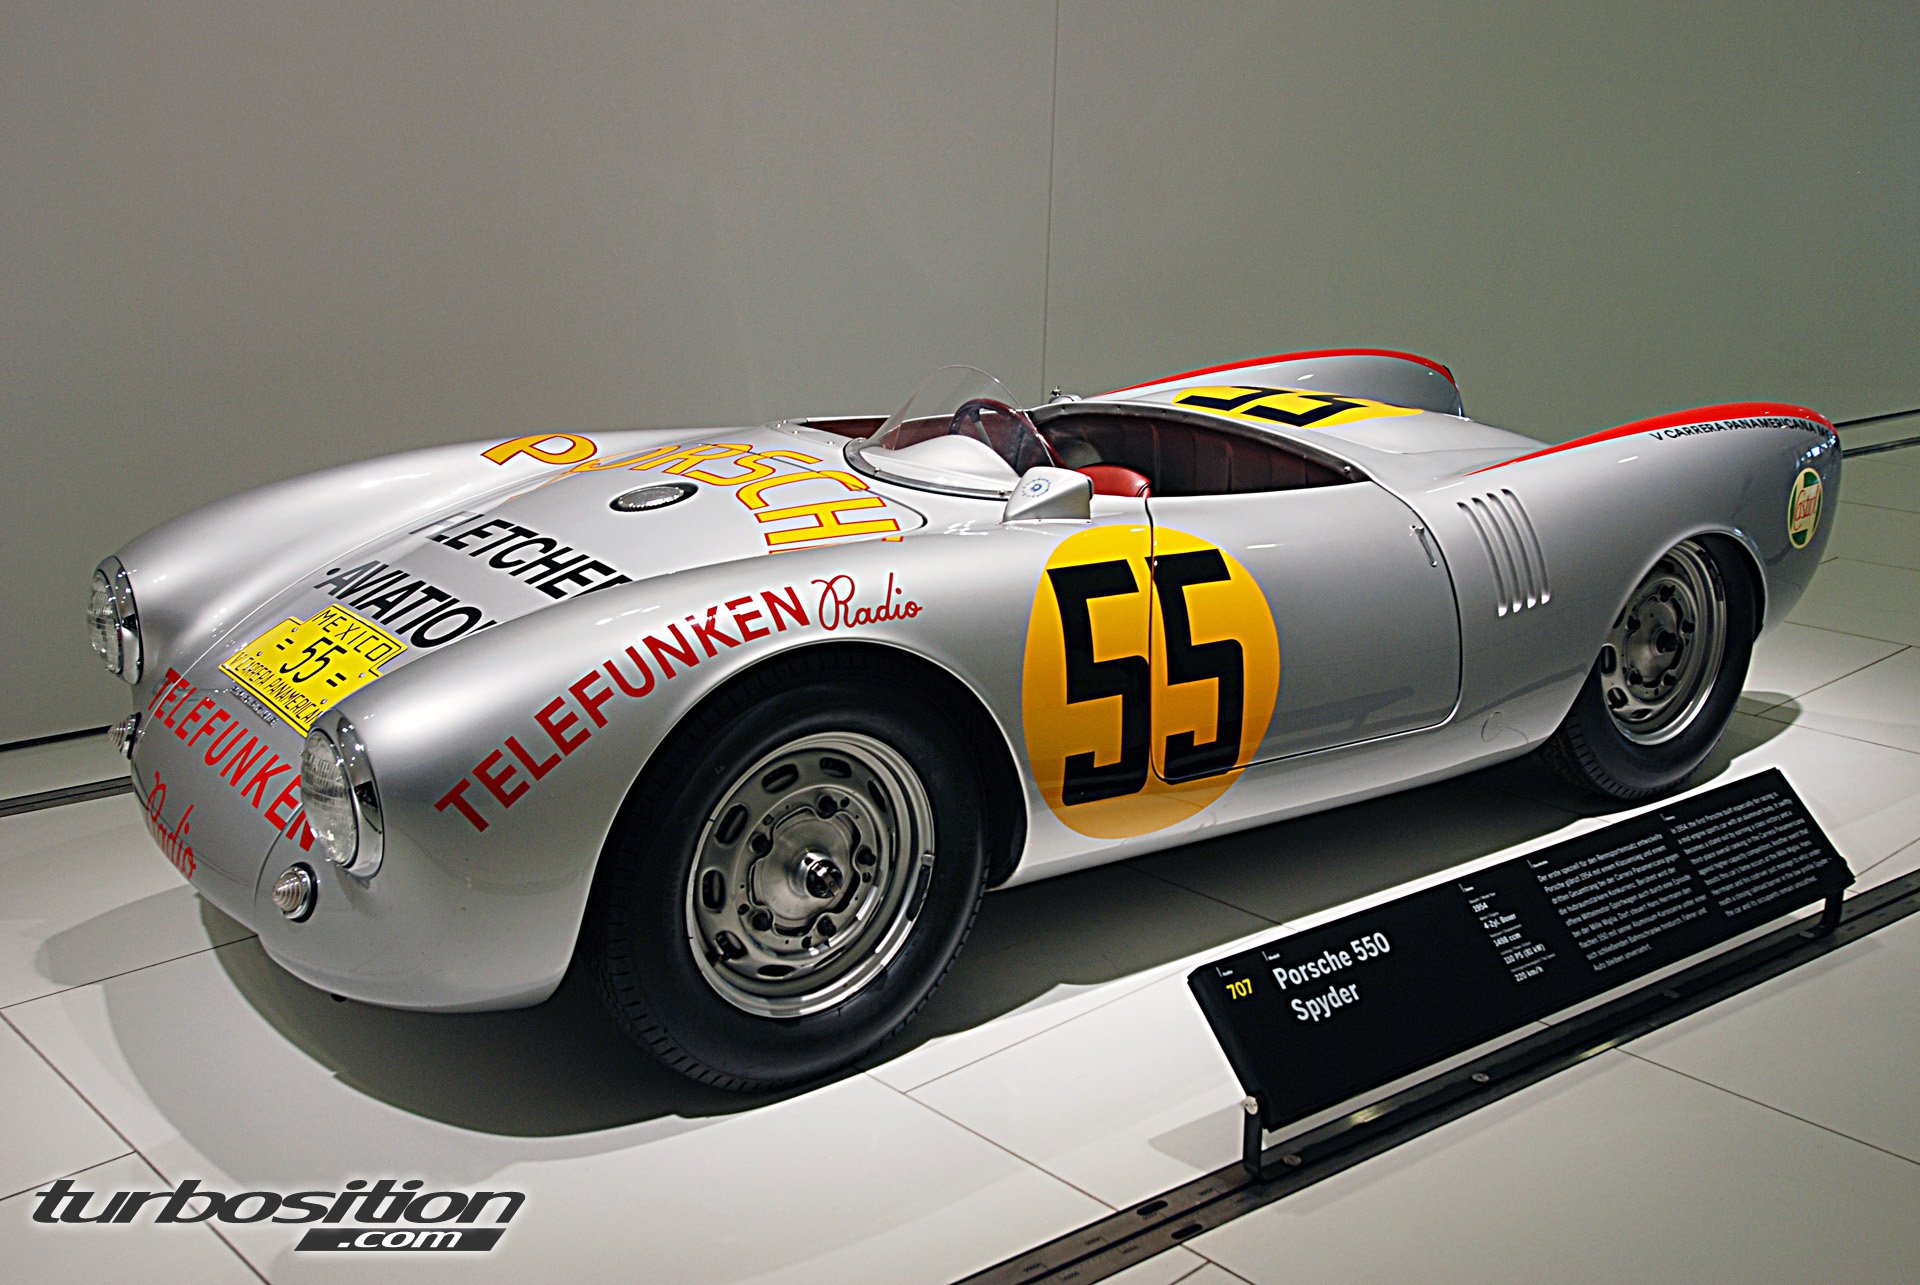 Porsche-Museum in Stuttgart-Zuffenhausen // TurboSition